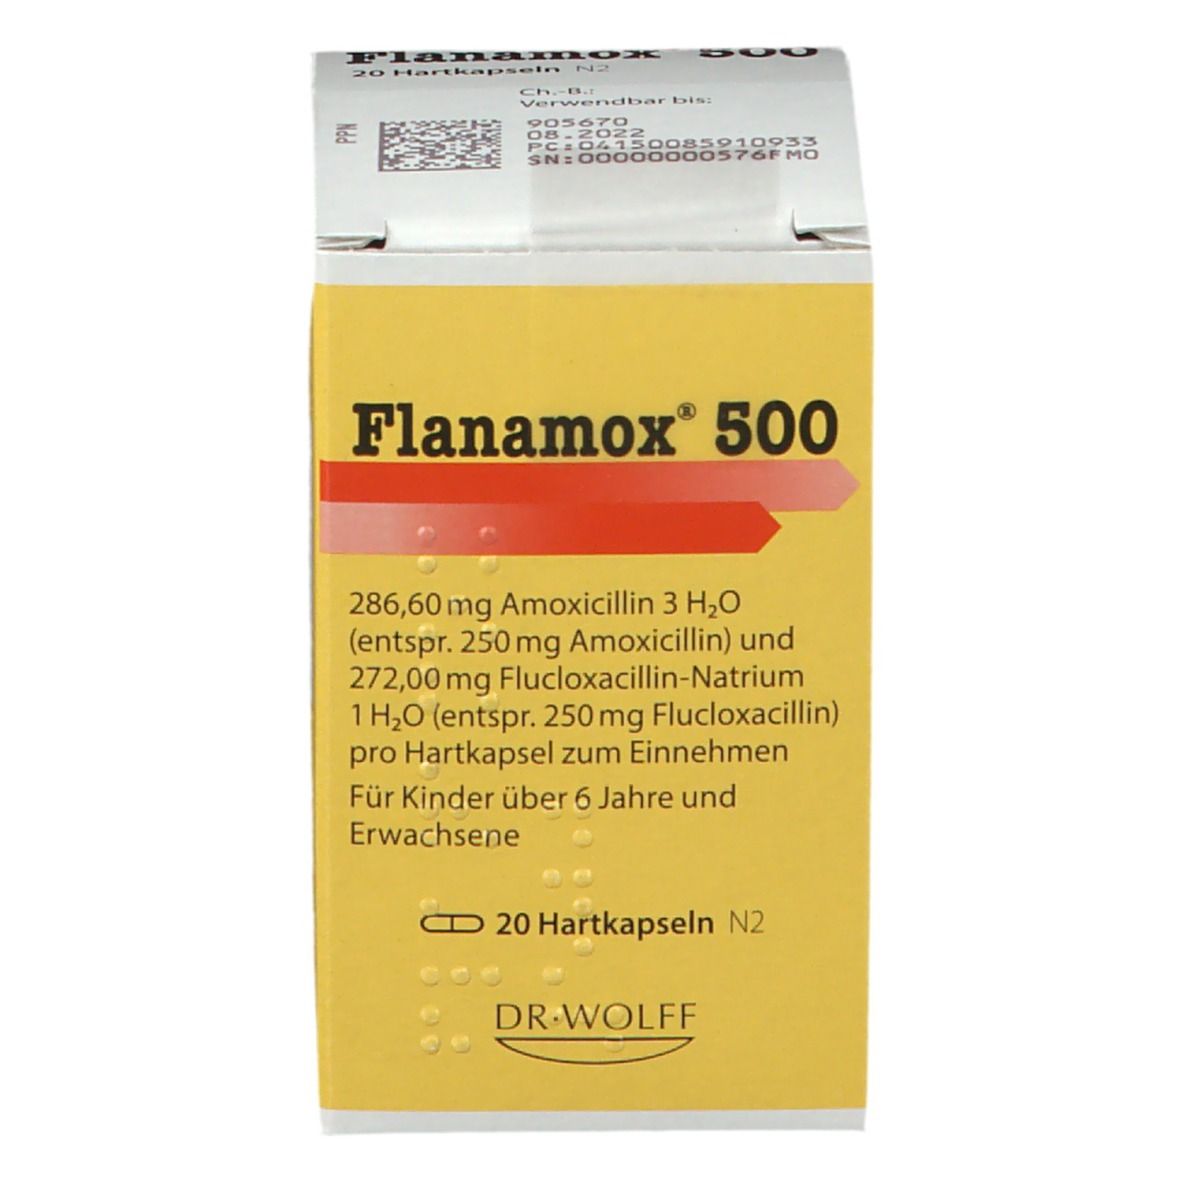 Flanamox 500